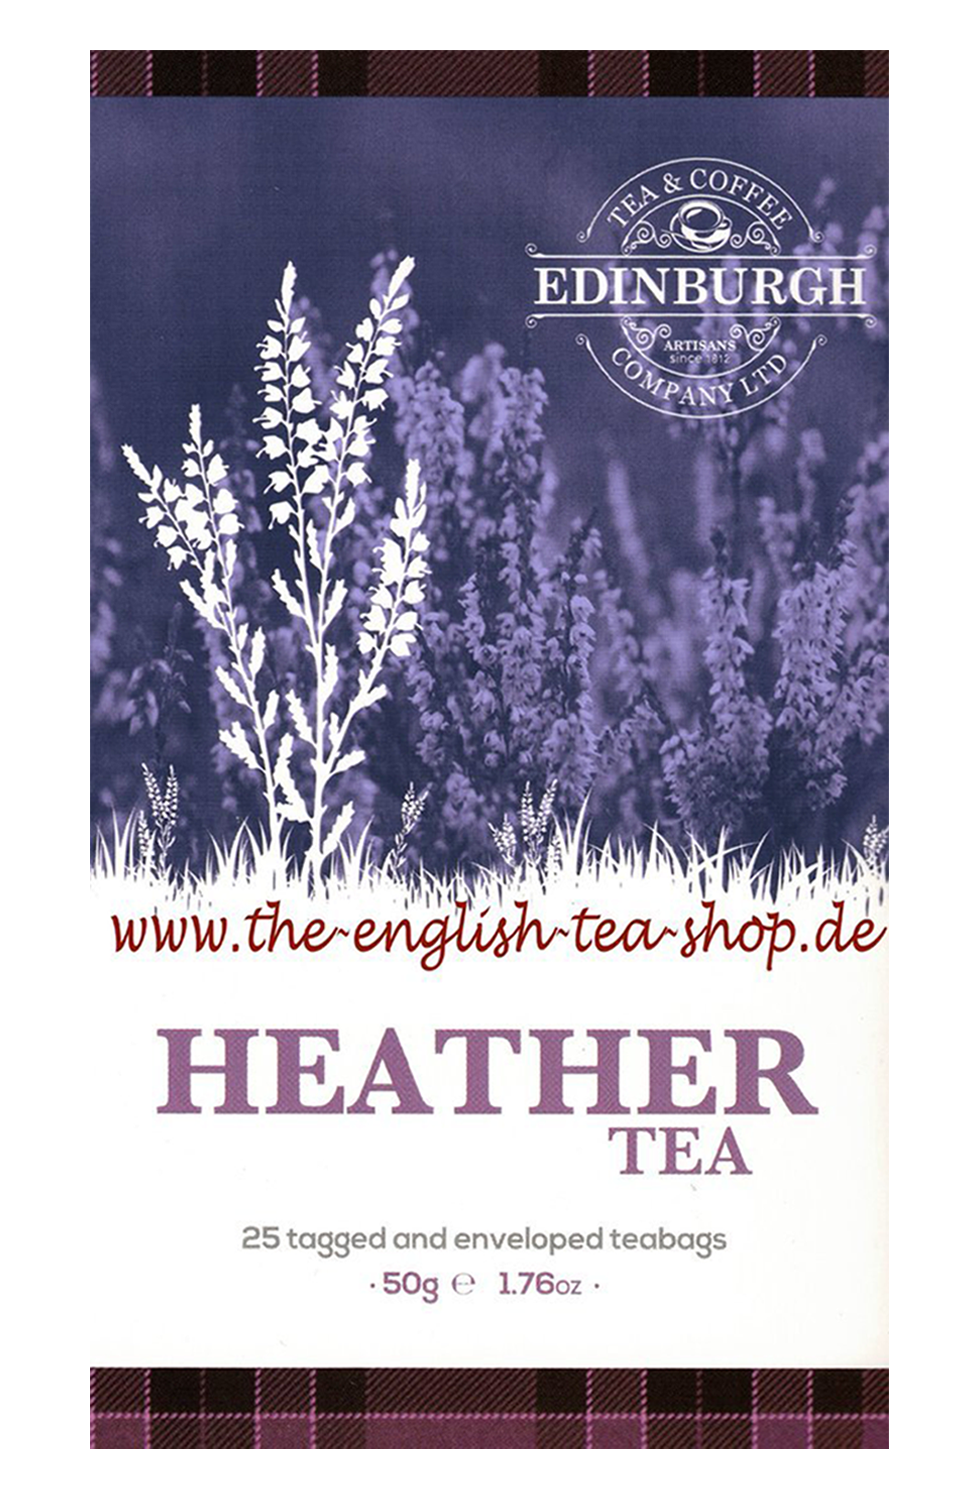 Edinburgh Heather Tea 25 tea bags